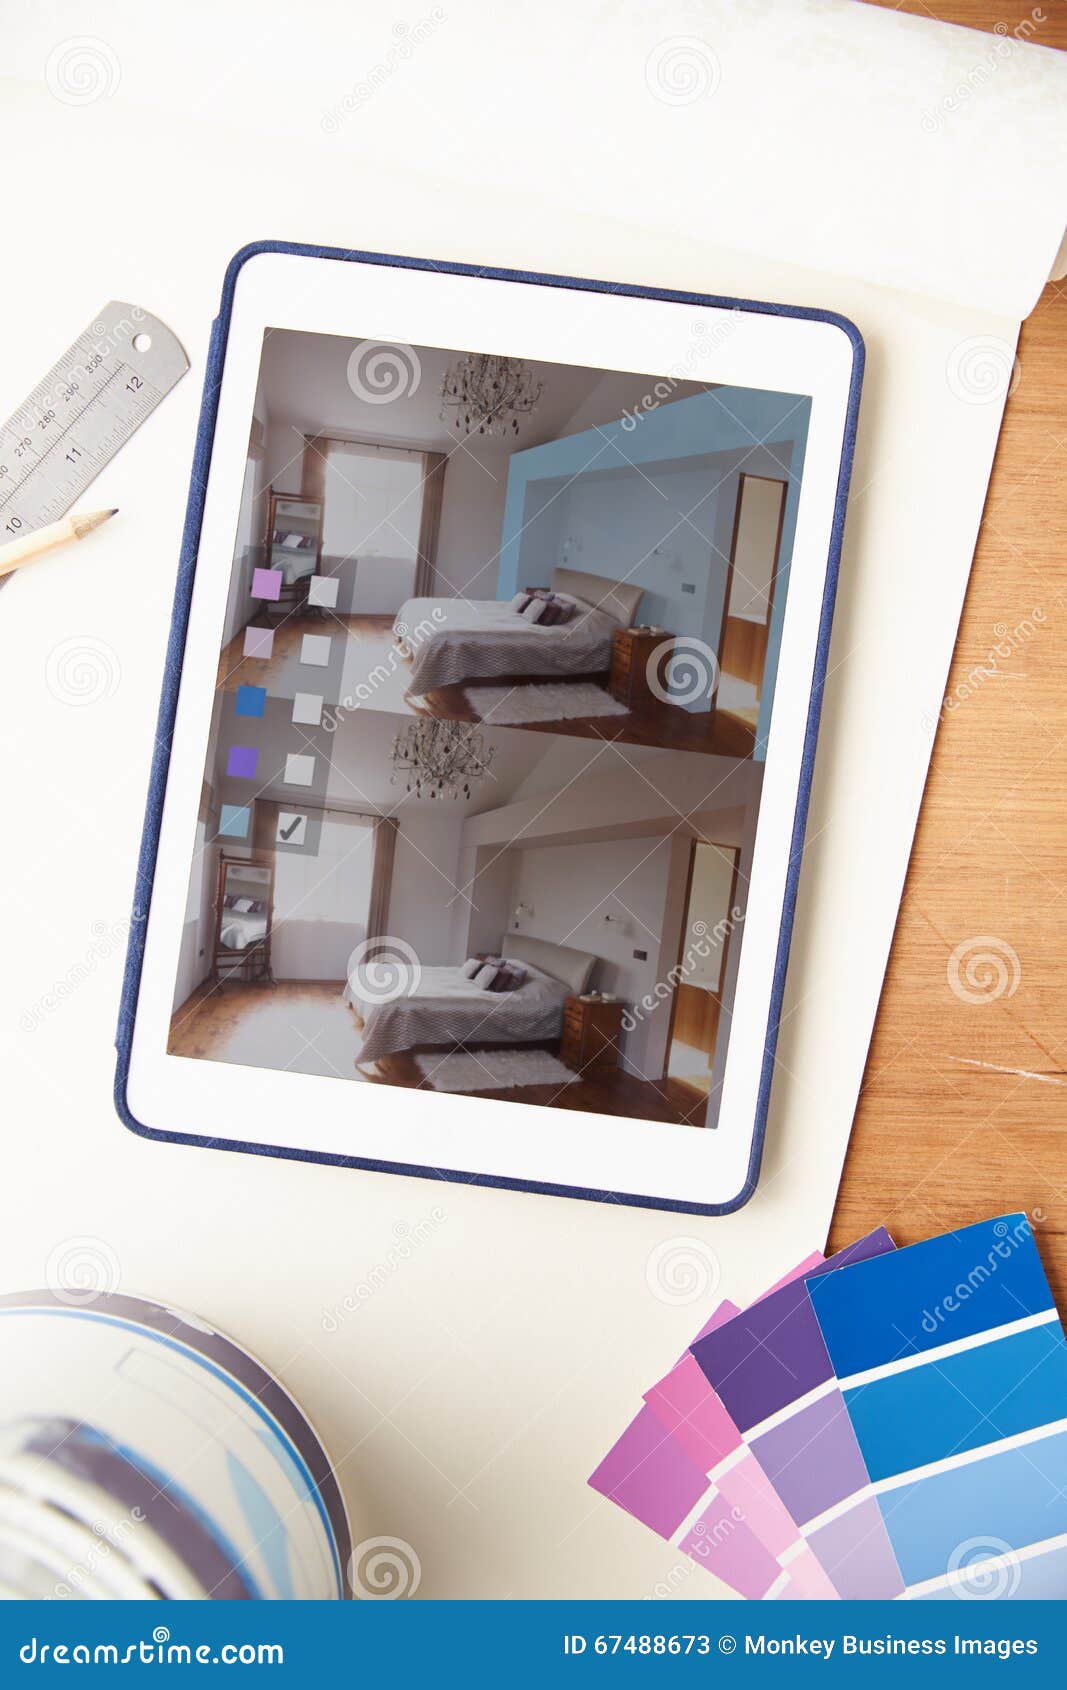 Interior Design Application On Digital Tablet Stock Image Image of